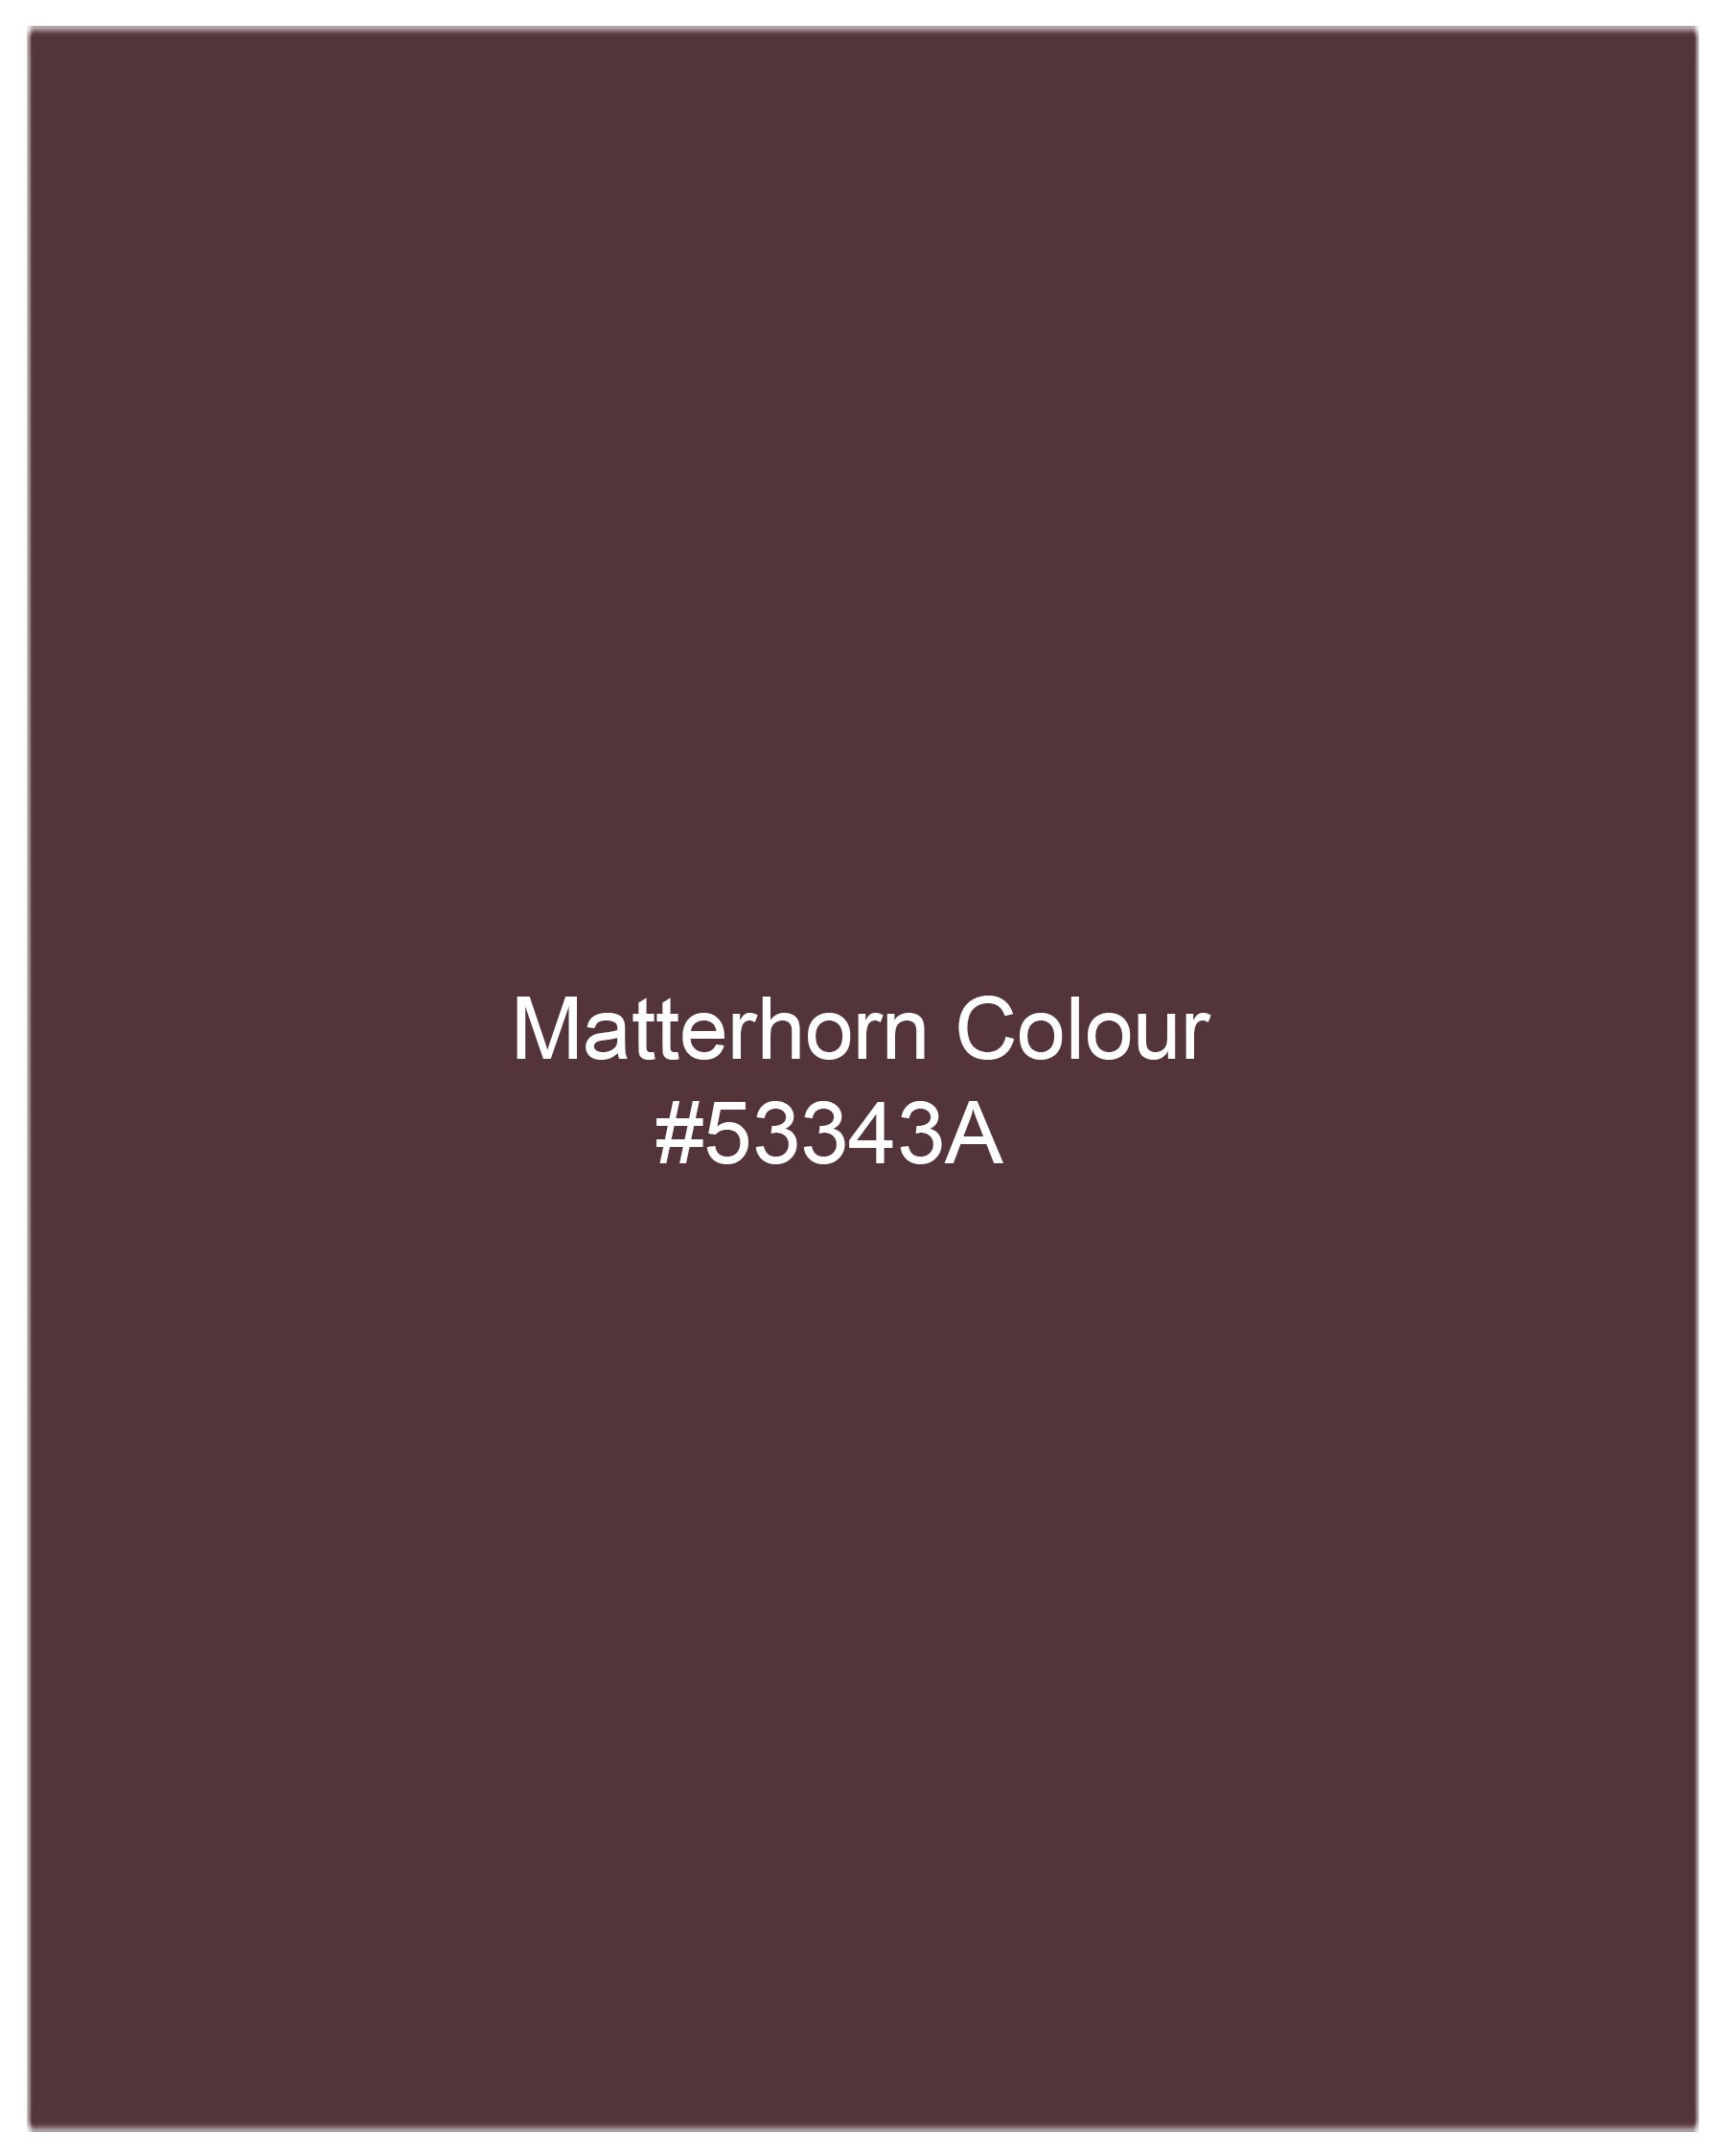 Matterhorn Maroon Pant T2029-28, T2029-30, T2029-32, T2029-34, T2029-36, T2029-38, T2029-40, T2029-42, T2029-44